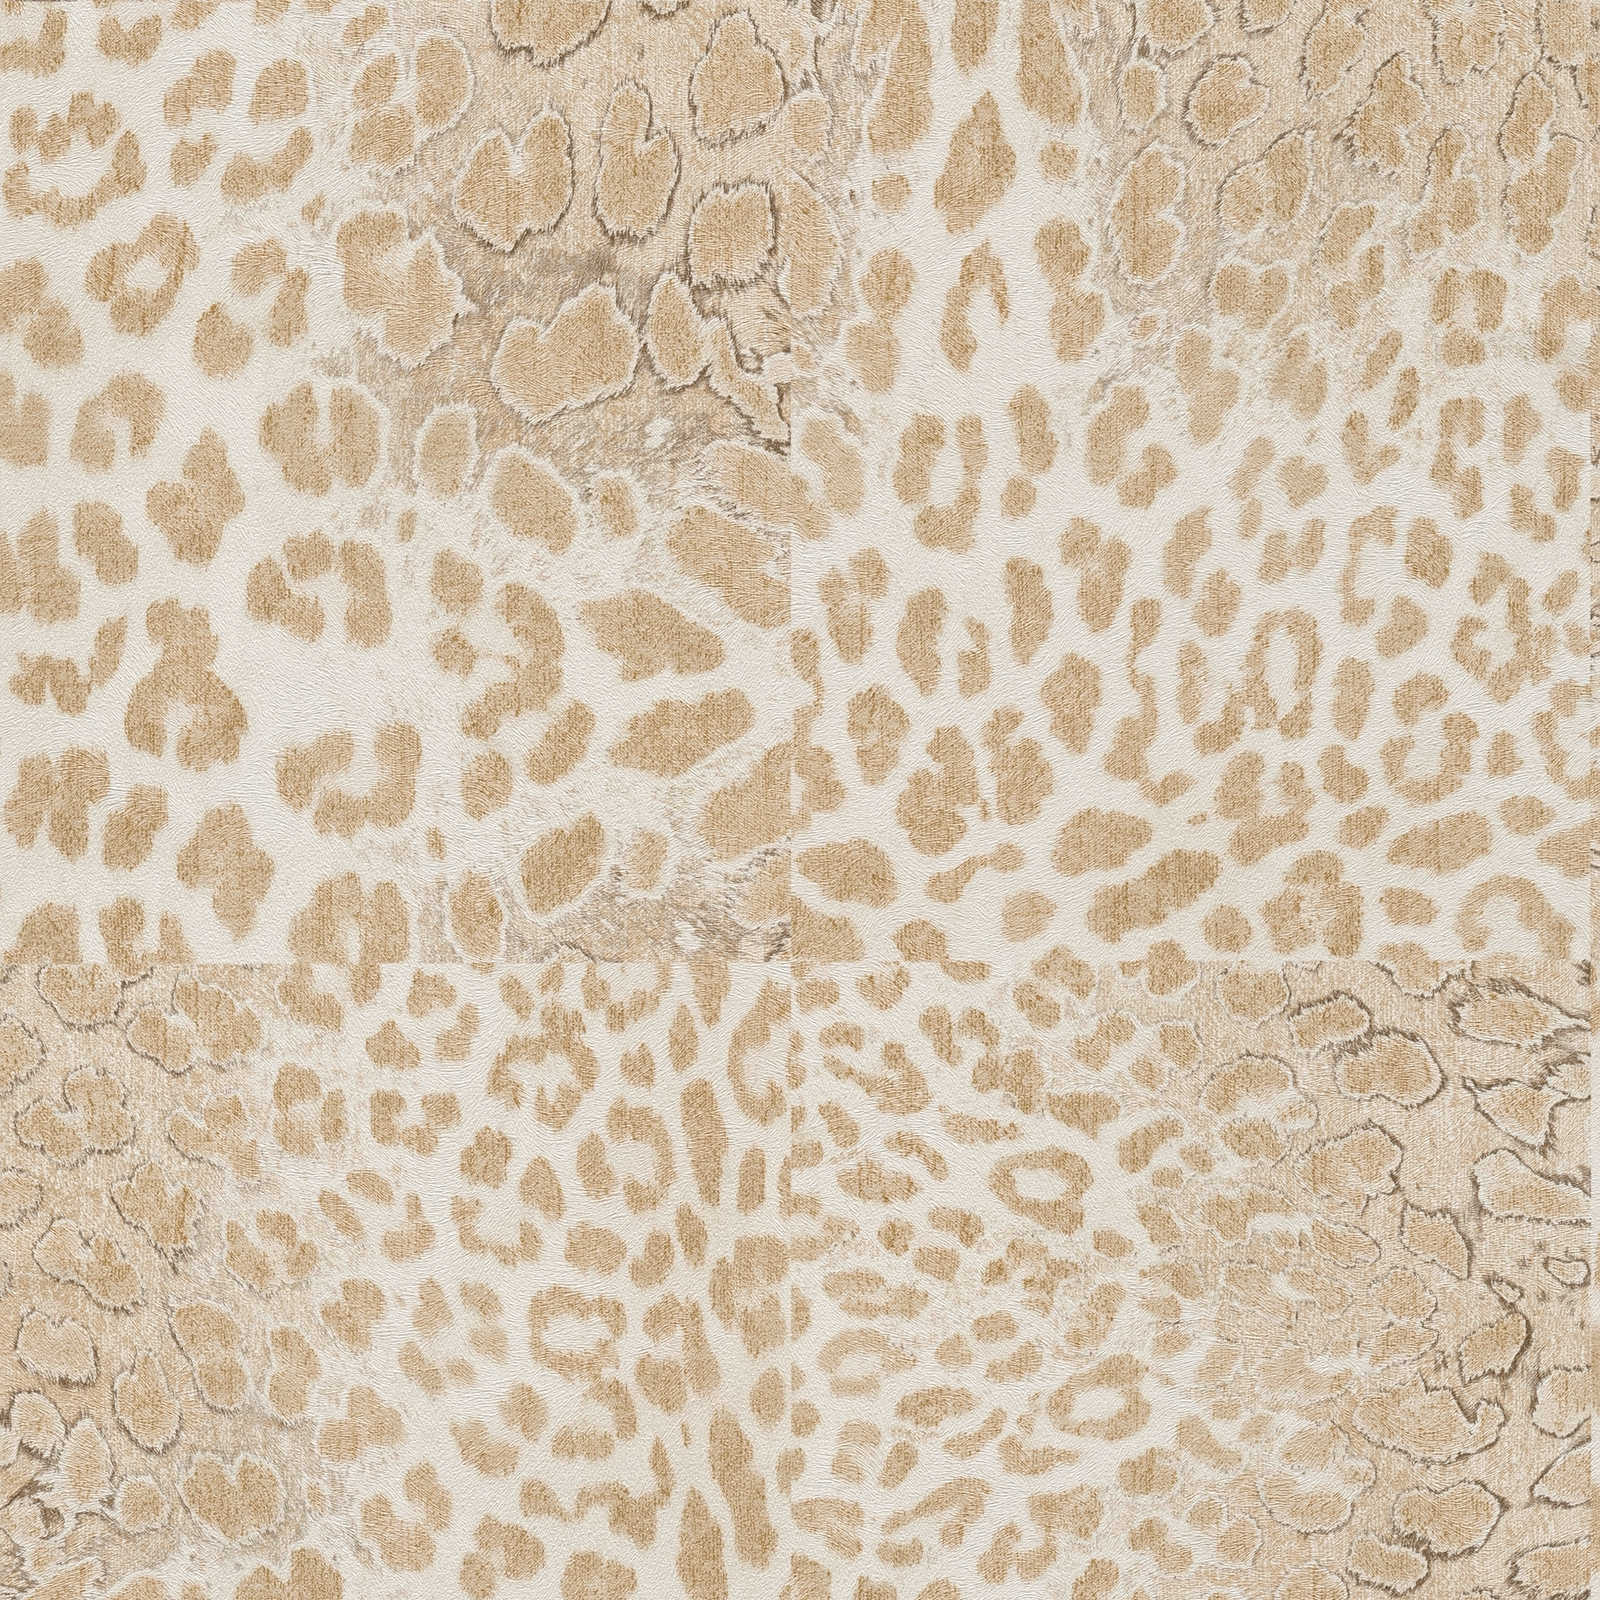         Animal print wallpaper leopard pattern - beige, metallic
    